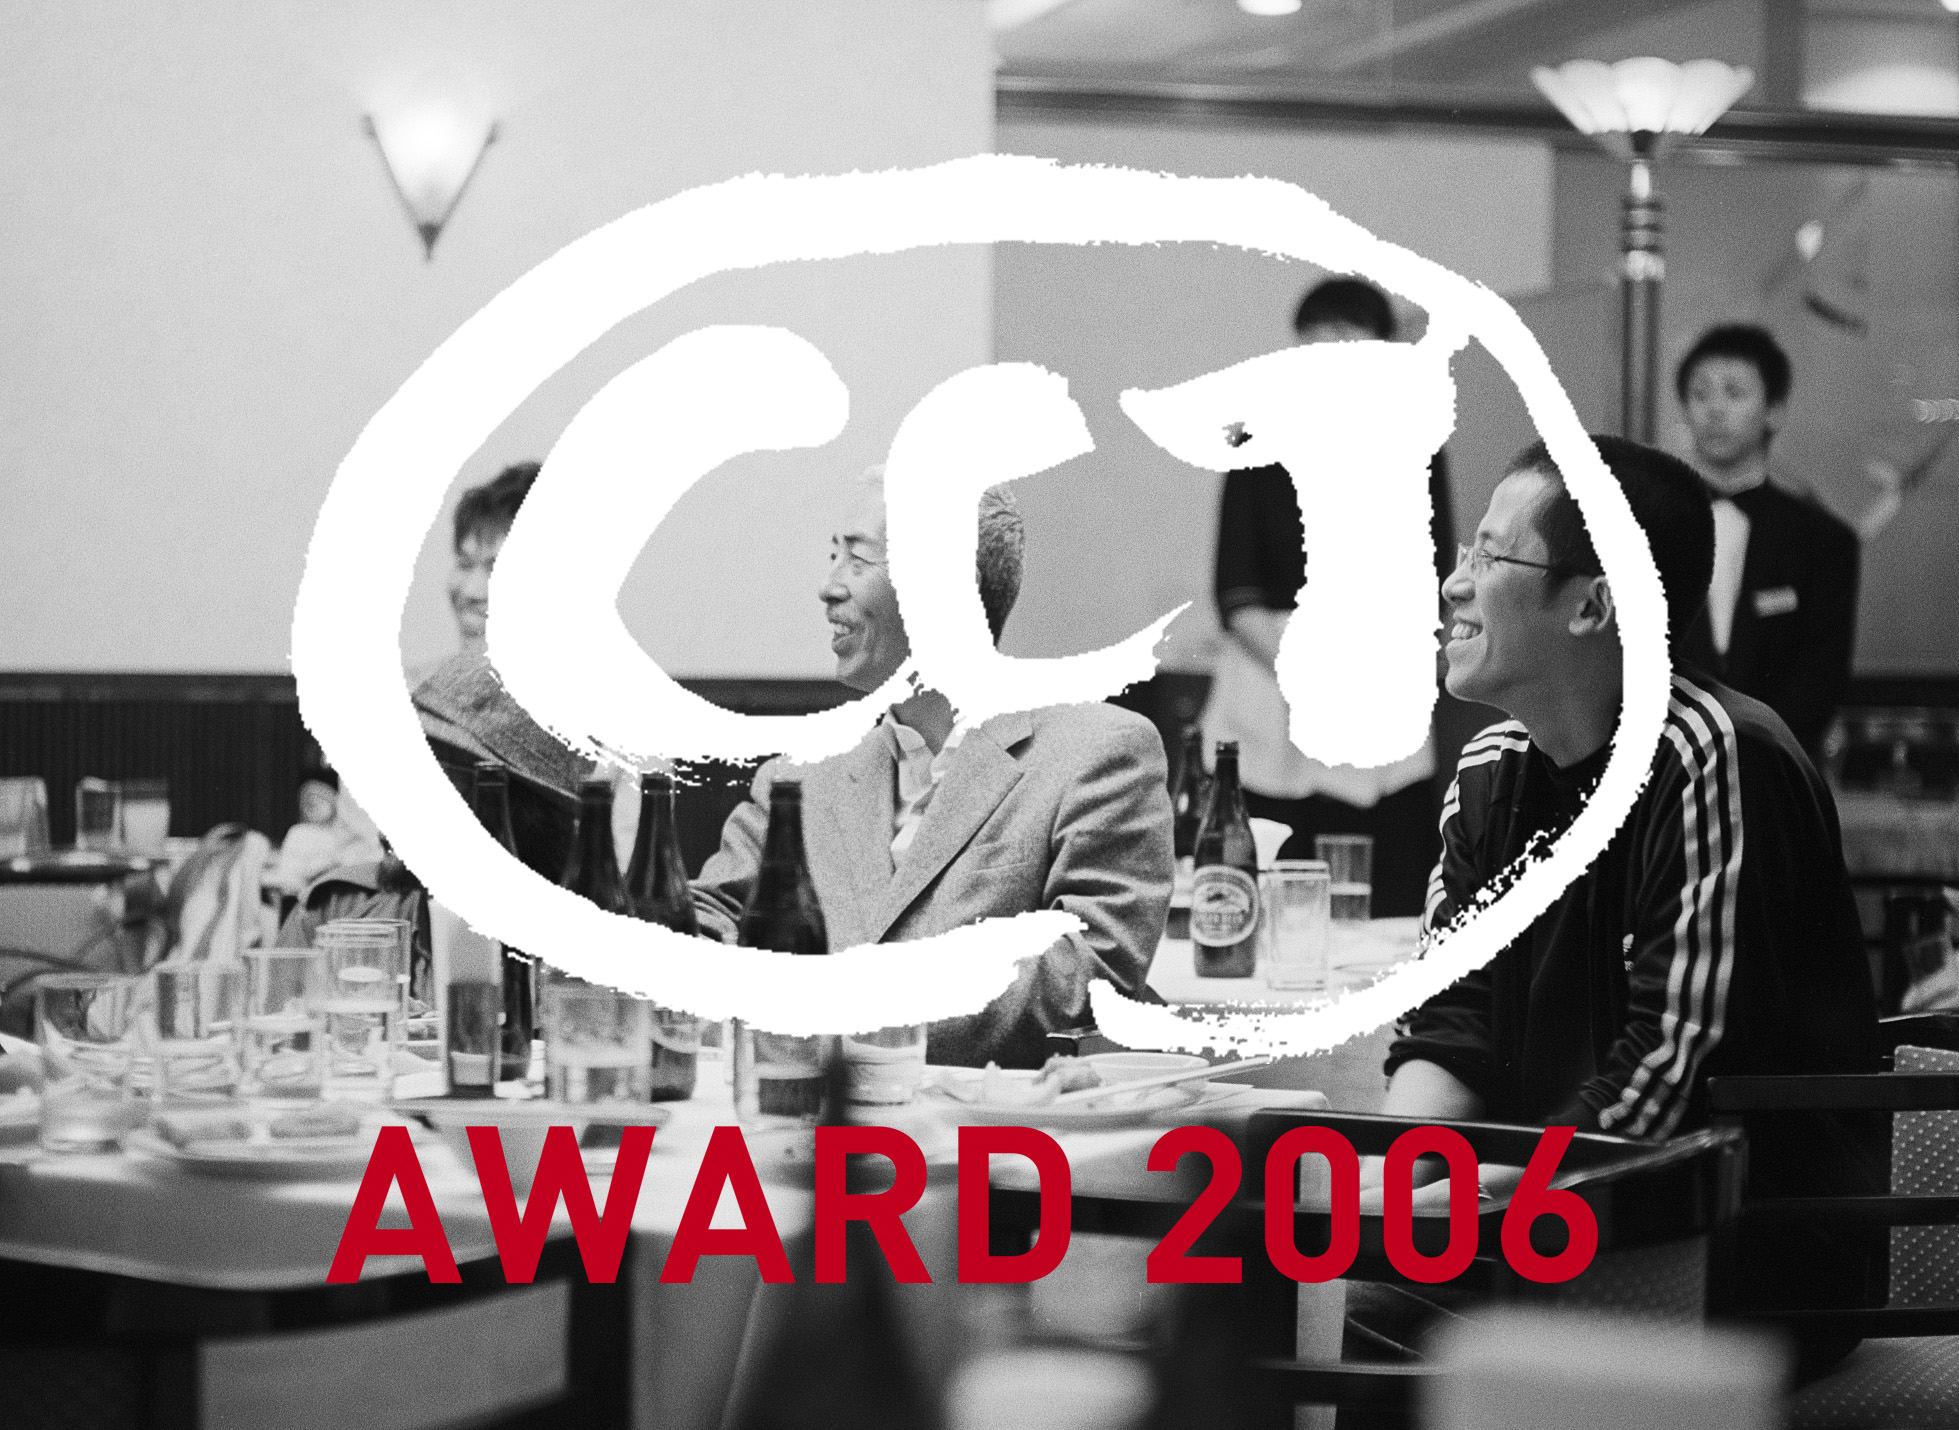 CCT AWARD 2006